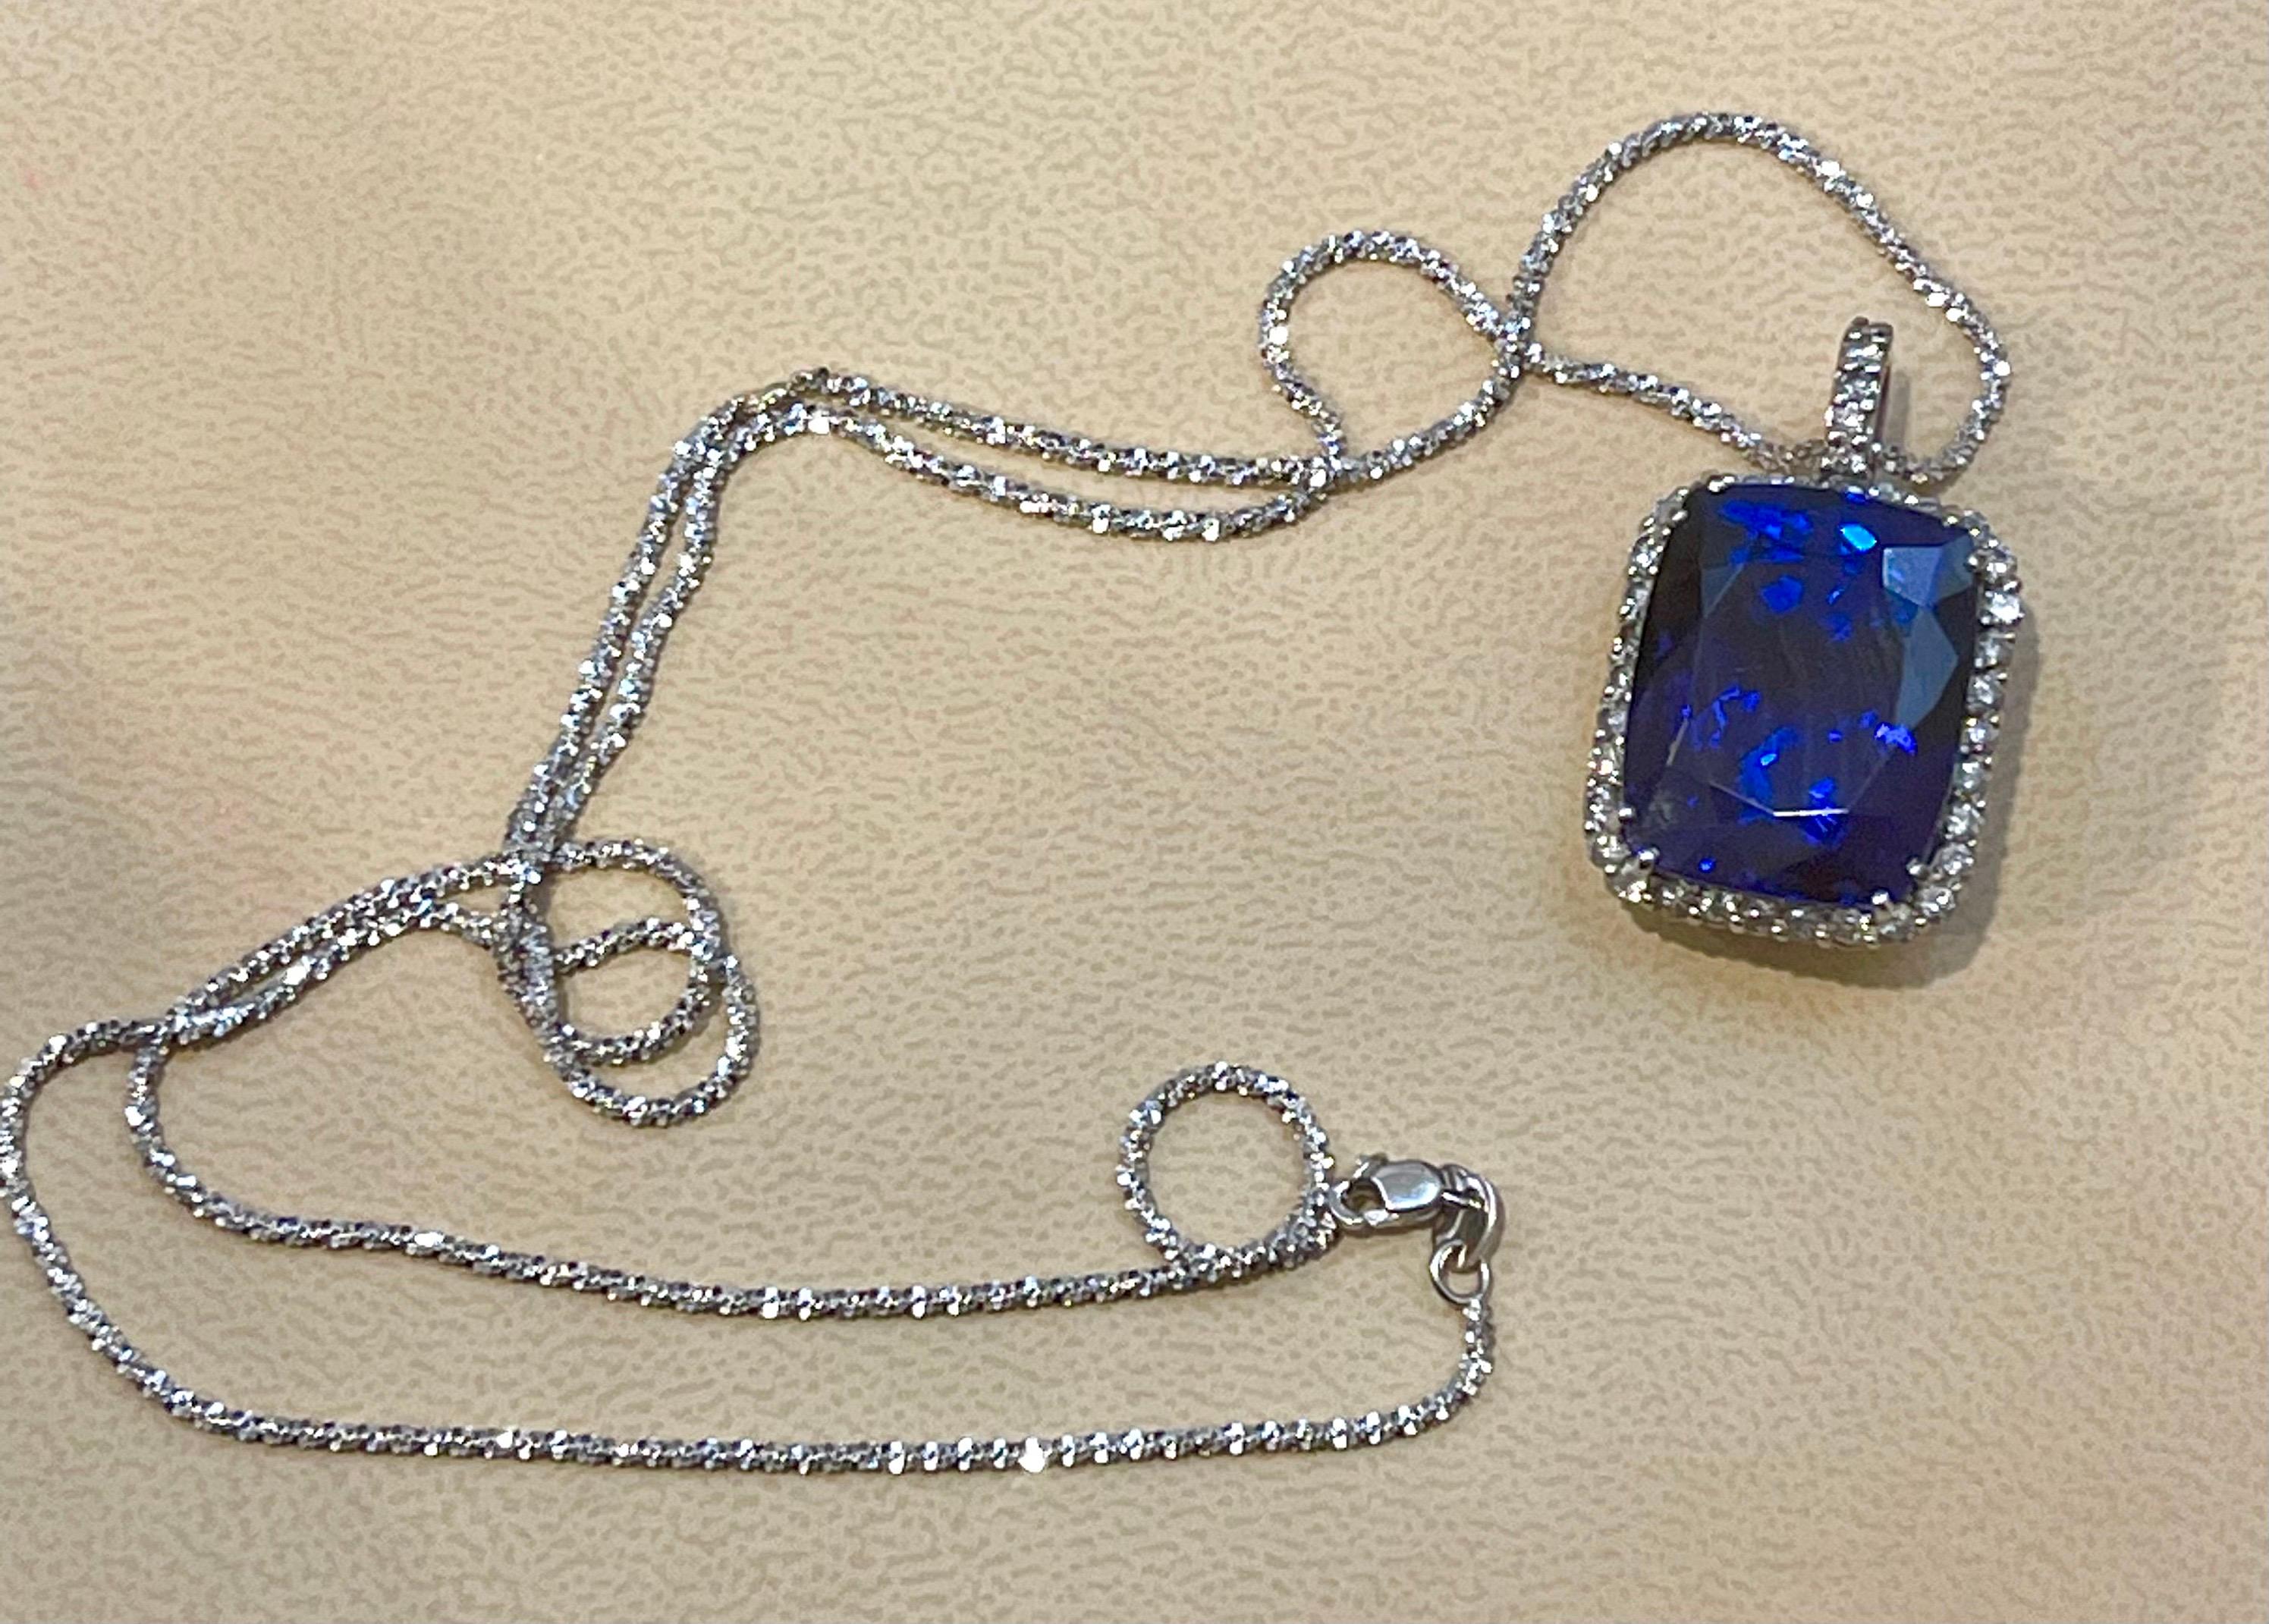 37.5 Carat Tanzanite Necklace & Diamond Pendant with Chain 14 Karat White Gold For Sale 5